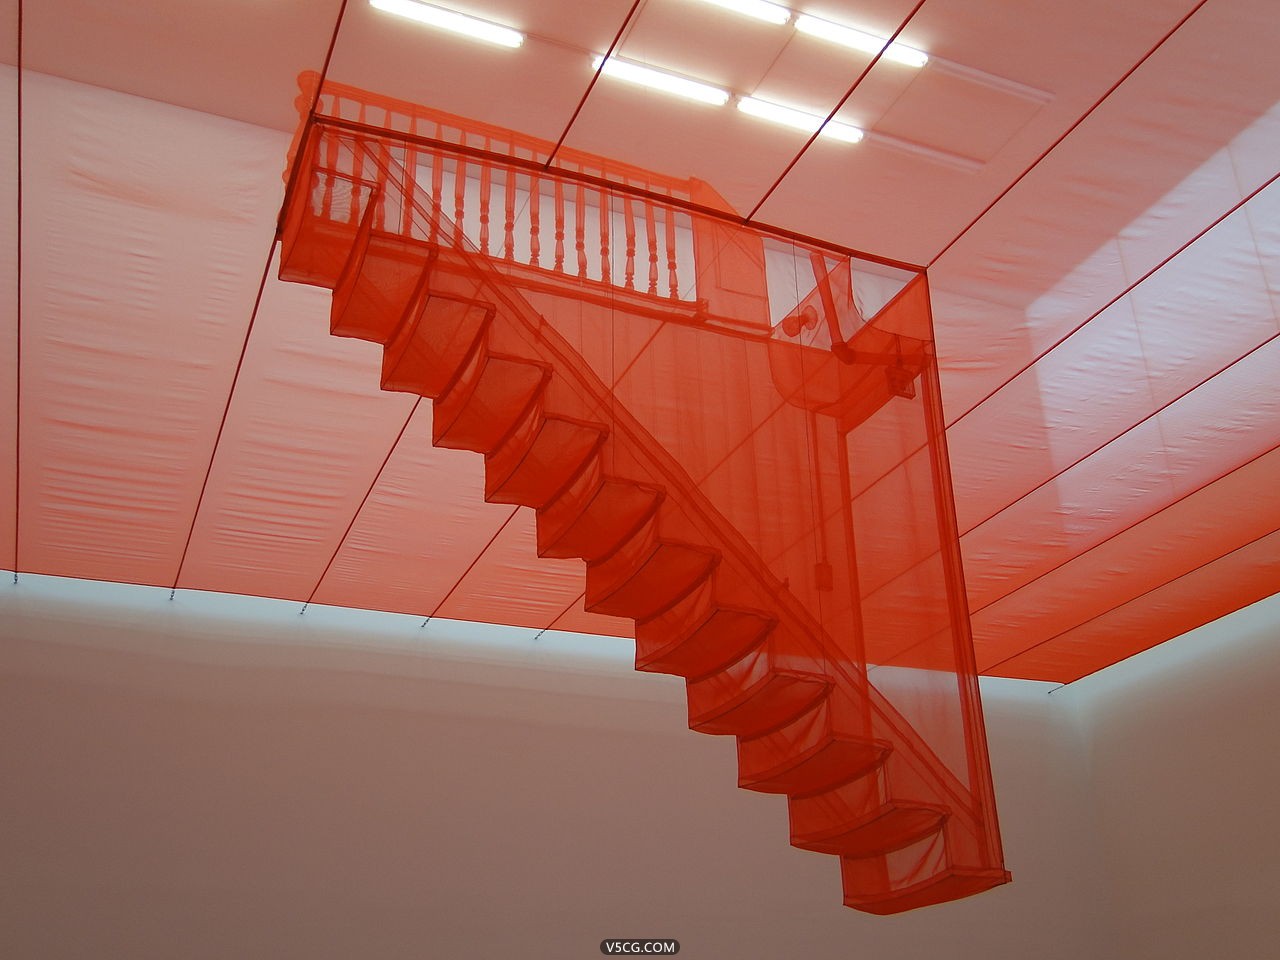 1280px-Staircase-III.JPG